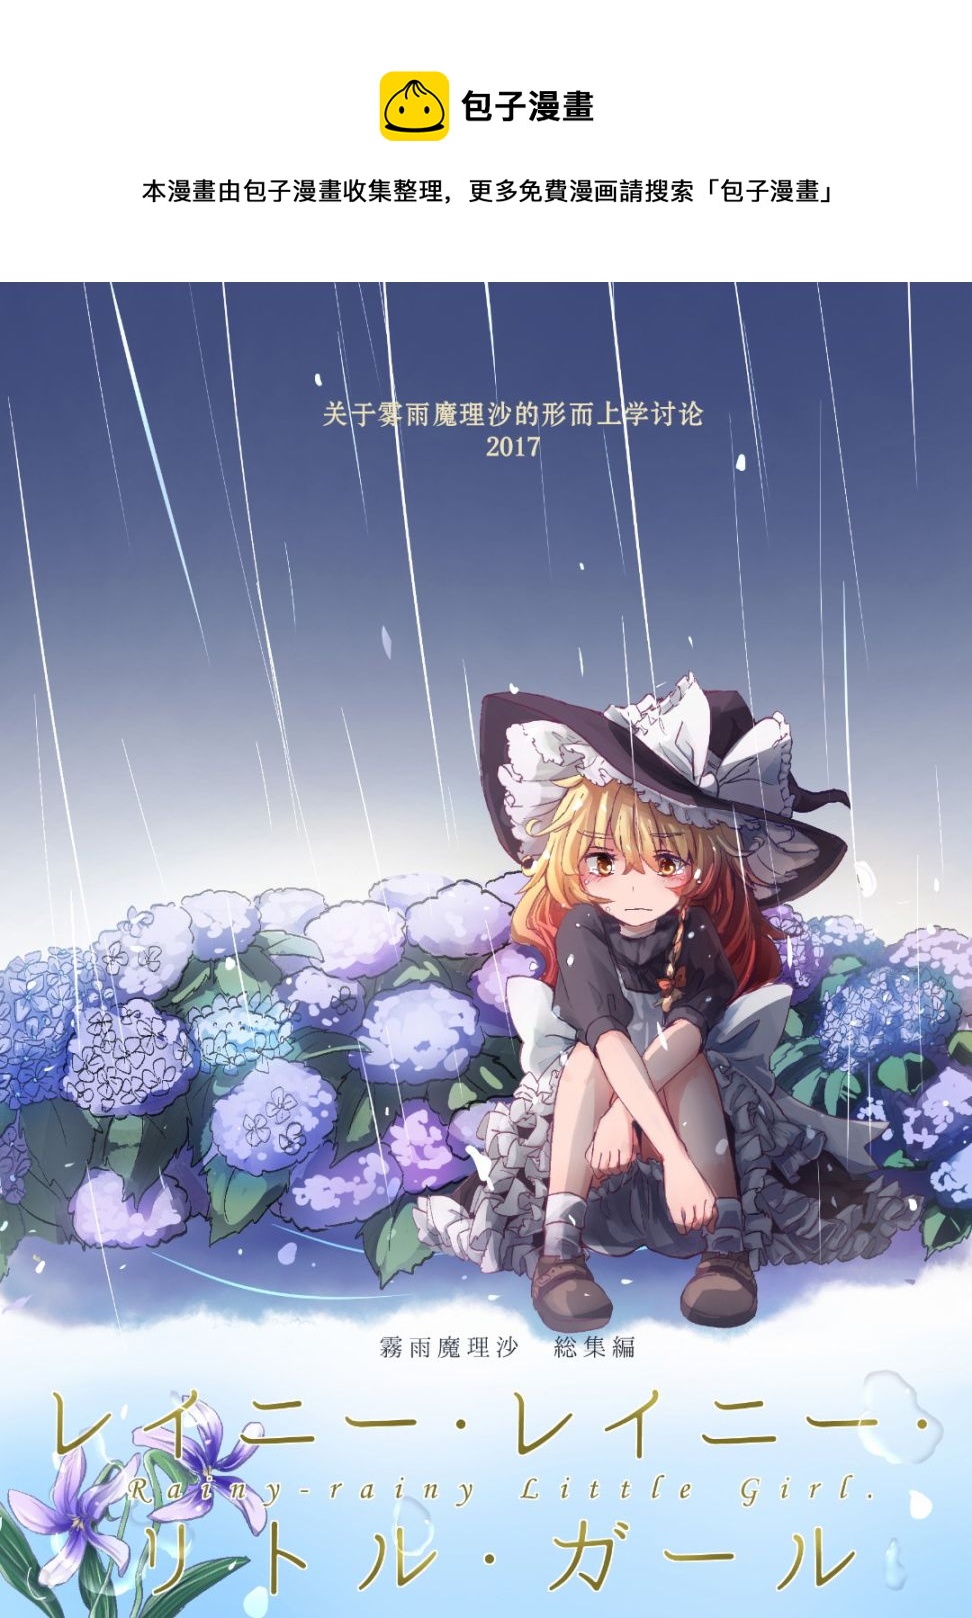 Rainy-rainy Little Girl - 短篇(1/7) - 1